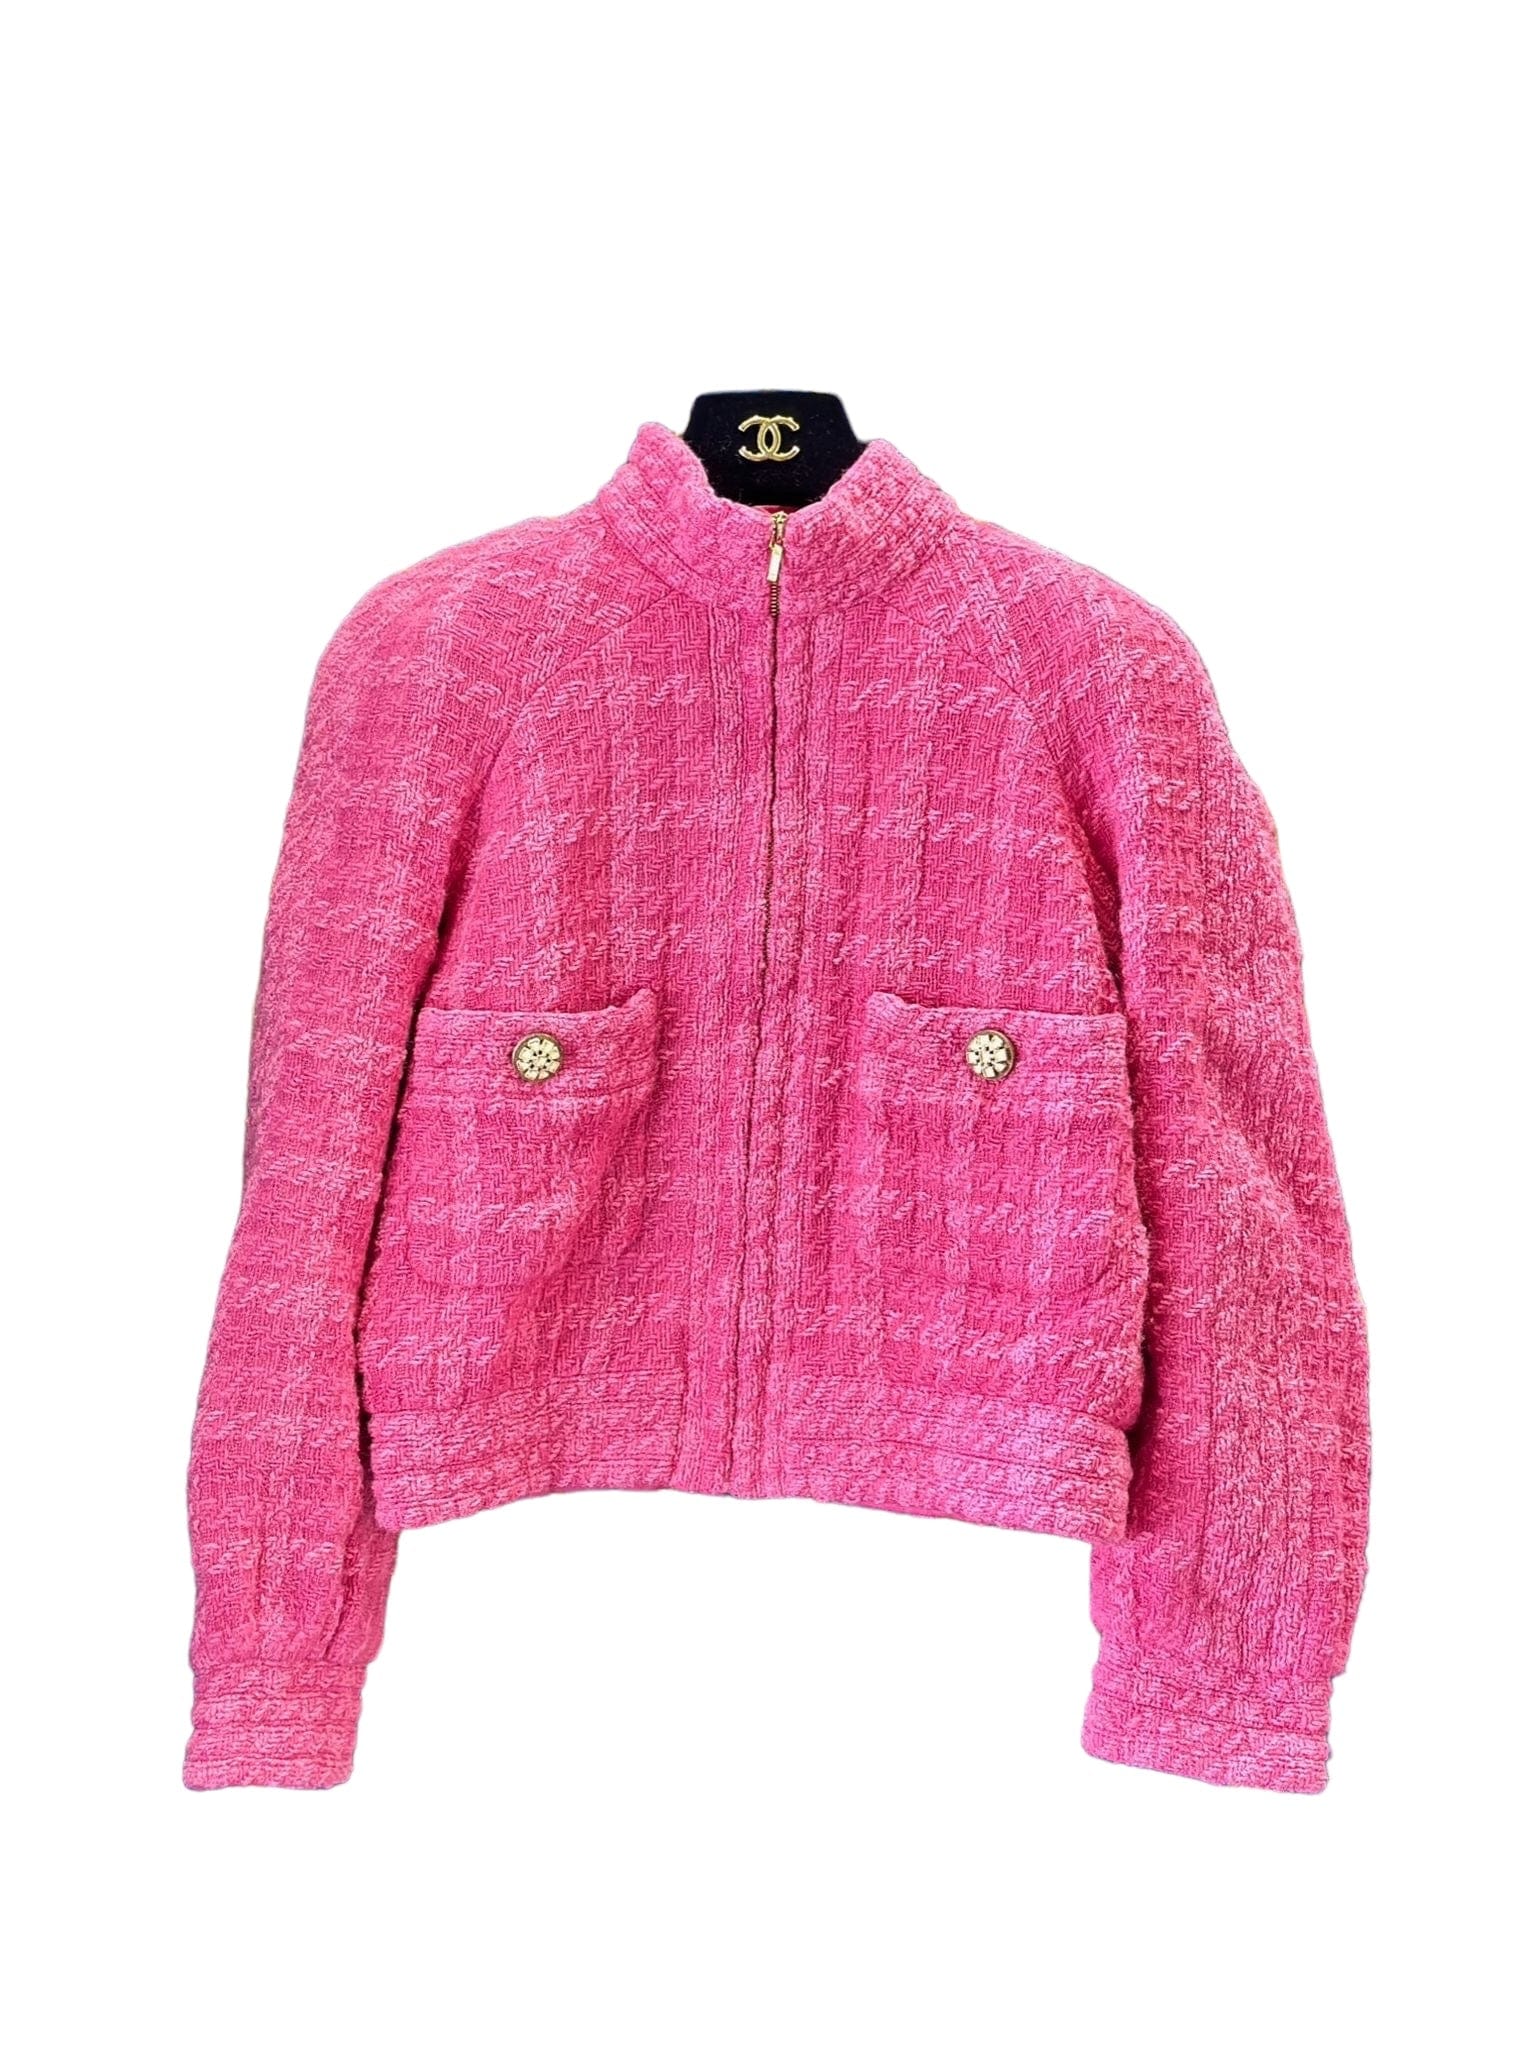 Chanel Chanel 19 Wool Pink Jacket